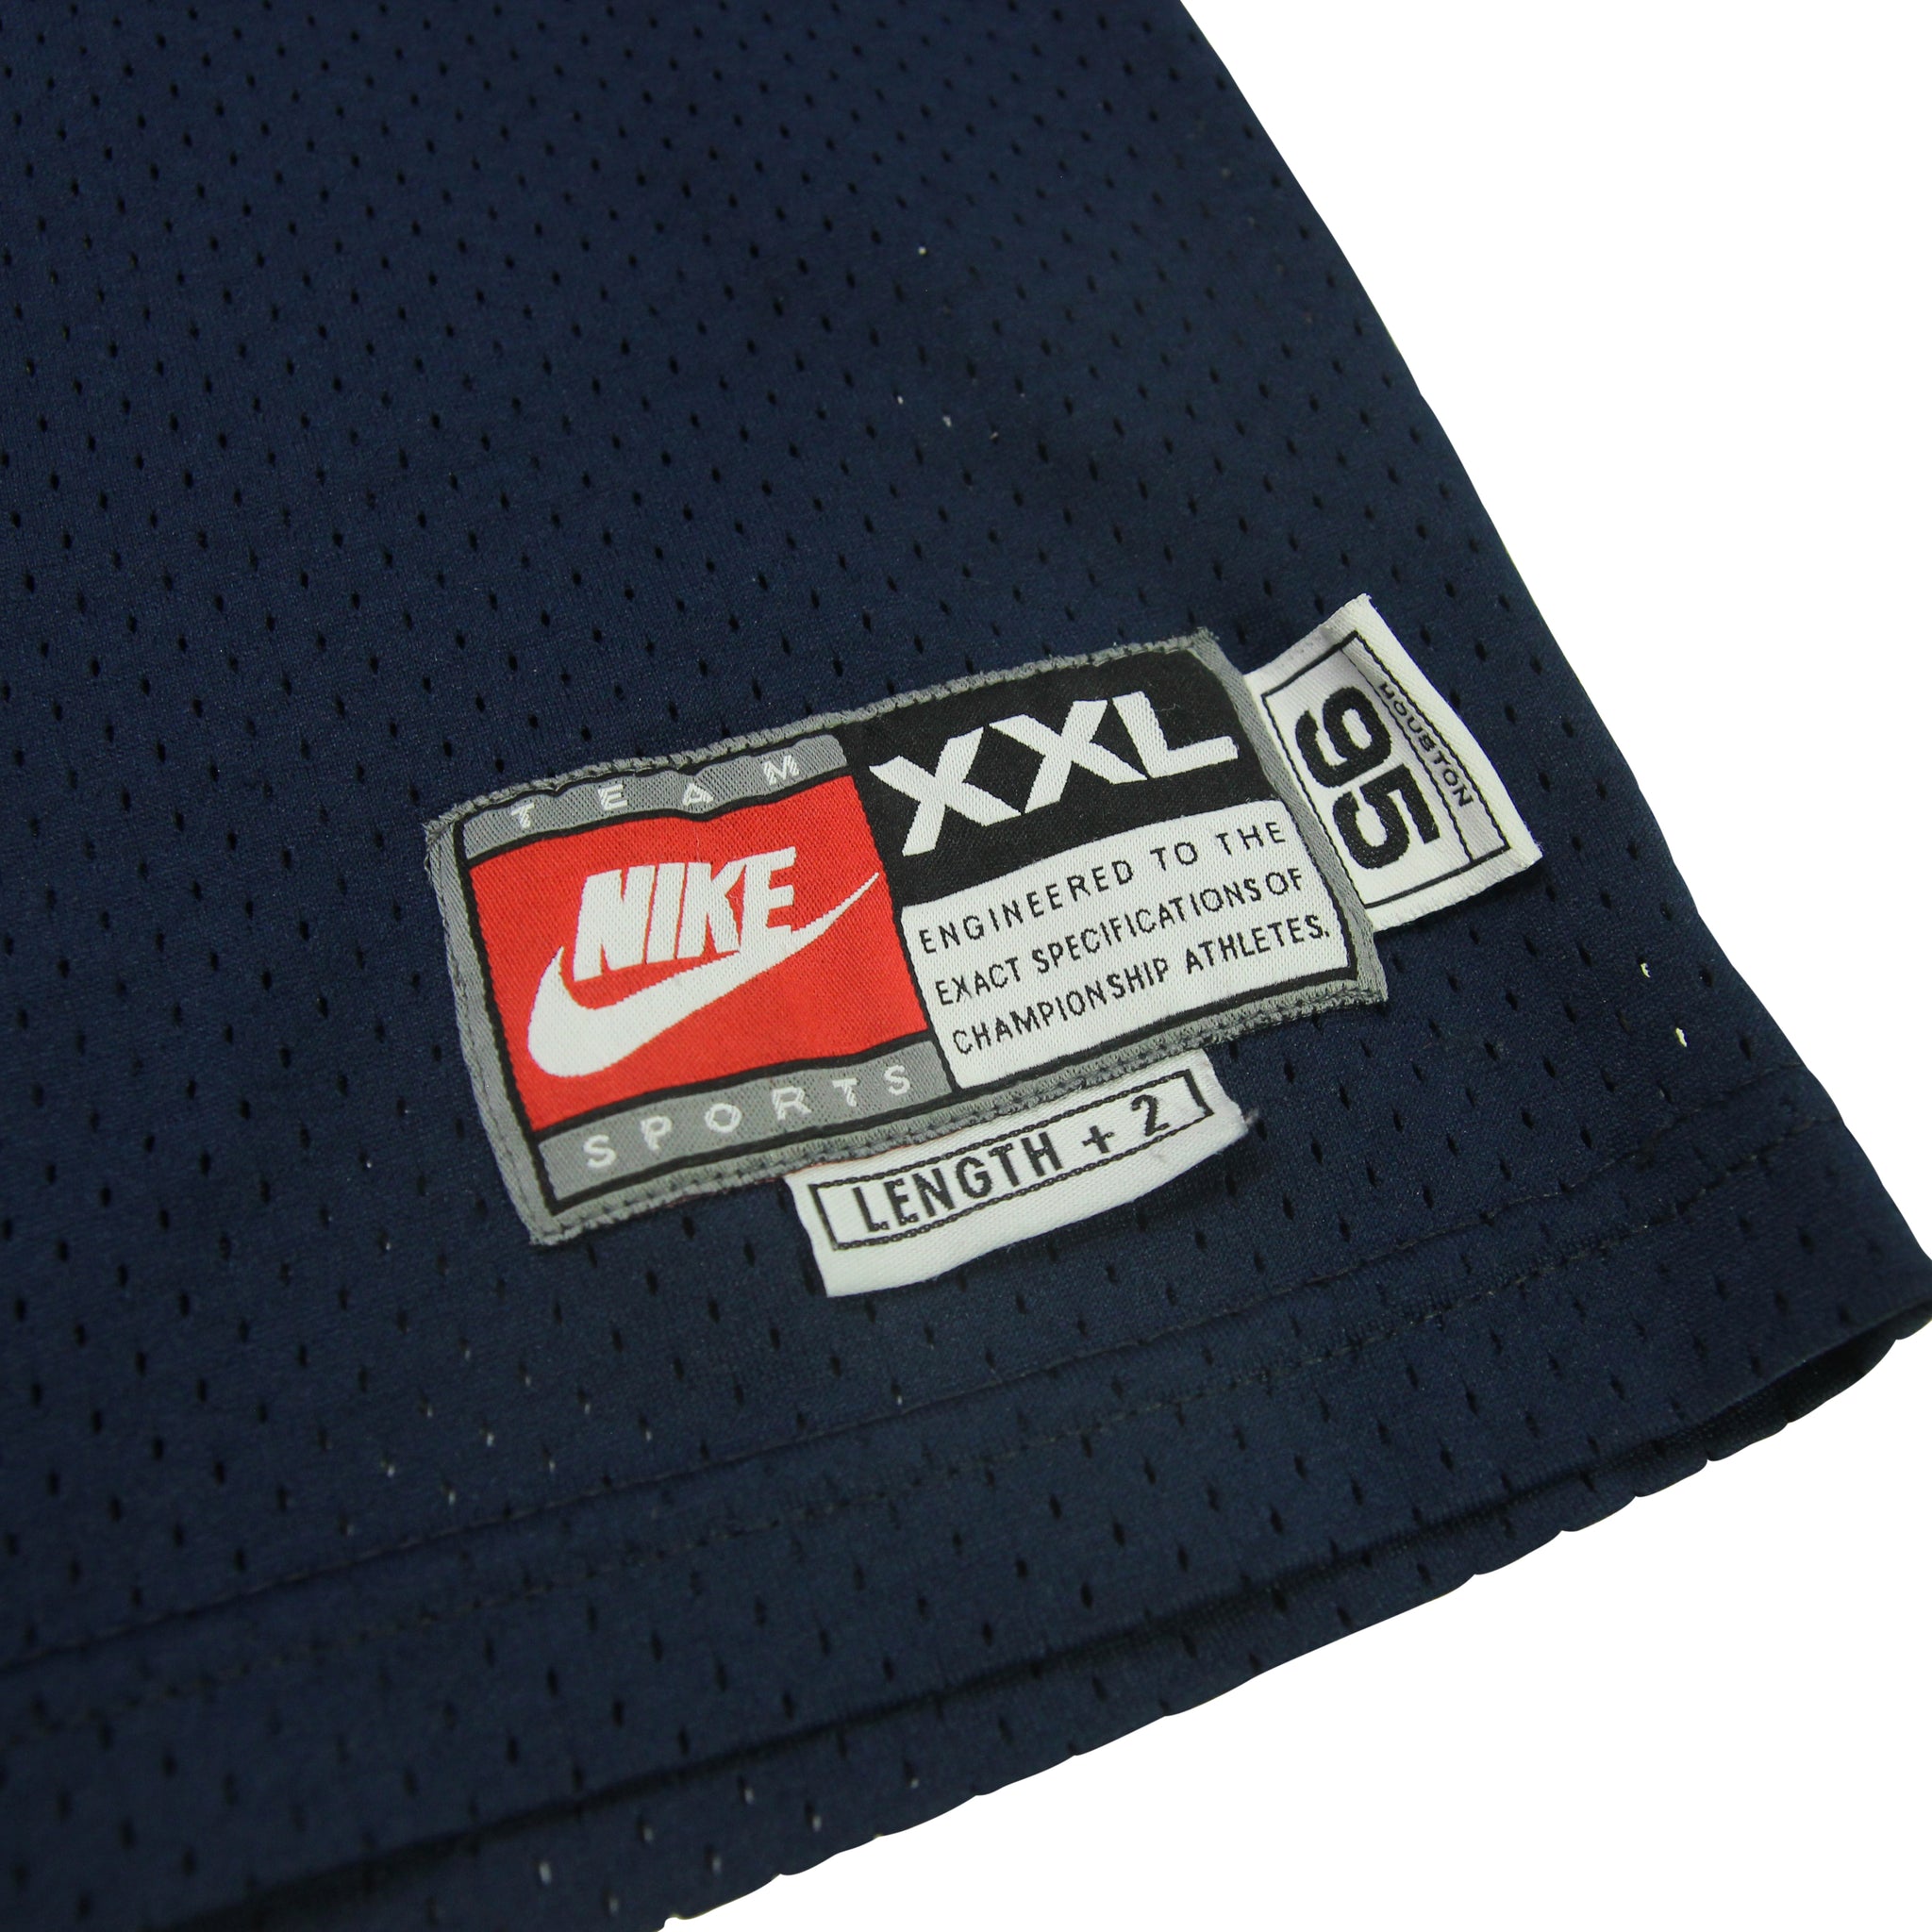 Vintage Nike NBA Houston Rockets Ming Yao #11 Jersey 2XL Stitched – Milk  Room: Luxury Streetwear x Vintage x Sneakers